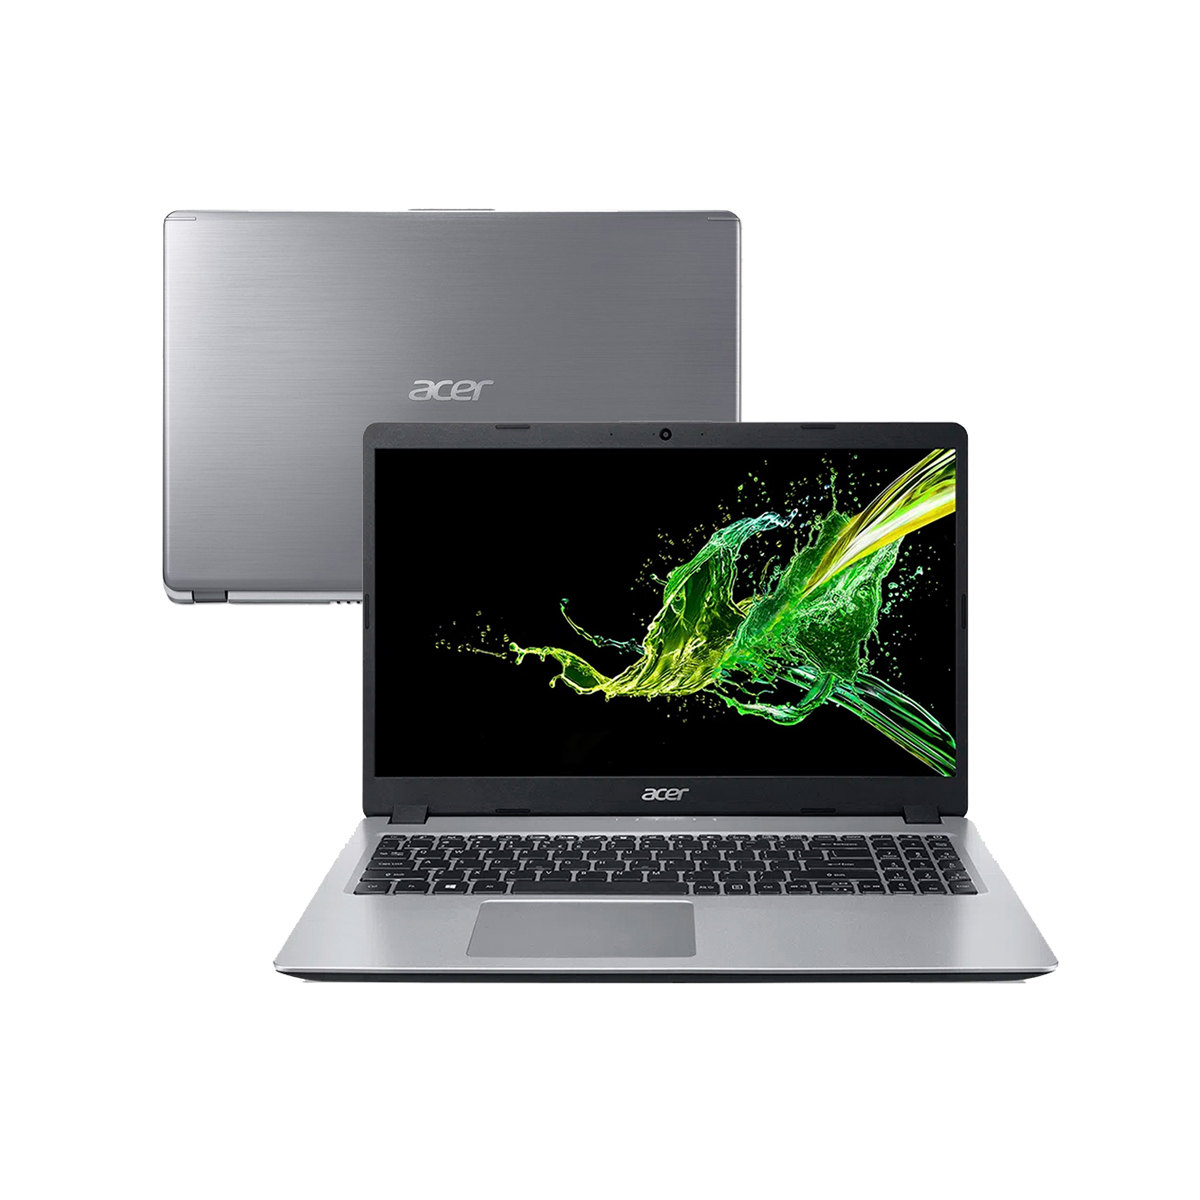 Notebook Acer A515 Core I5 8265u Memoria 8gb Ddr4 Ssd 120gb Tela 15.6' Led Hd Windows 10 Home